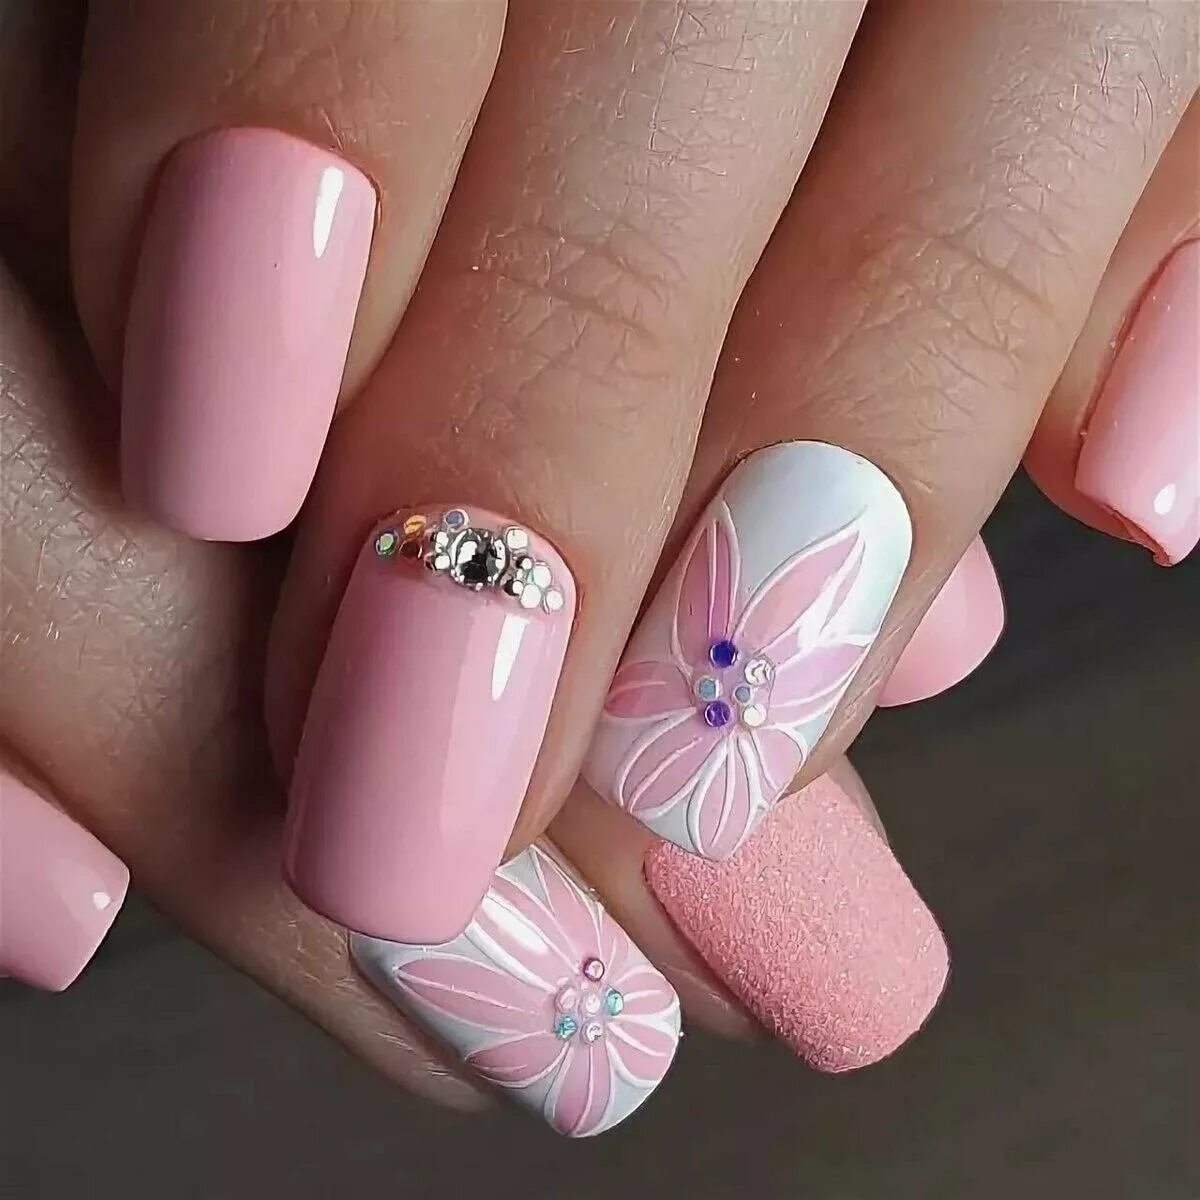 Самые красивые ногти на весну. Розовый маникюр. Р̸о̸з̸о̸в̸ы̸й̸ м̸а̸н̸и̸к̸. Красивые ногти. Красивые ногти на лето.